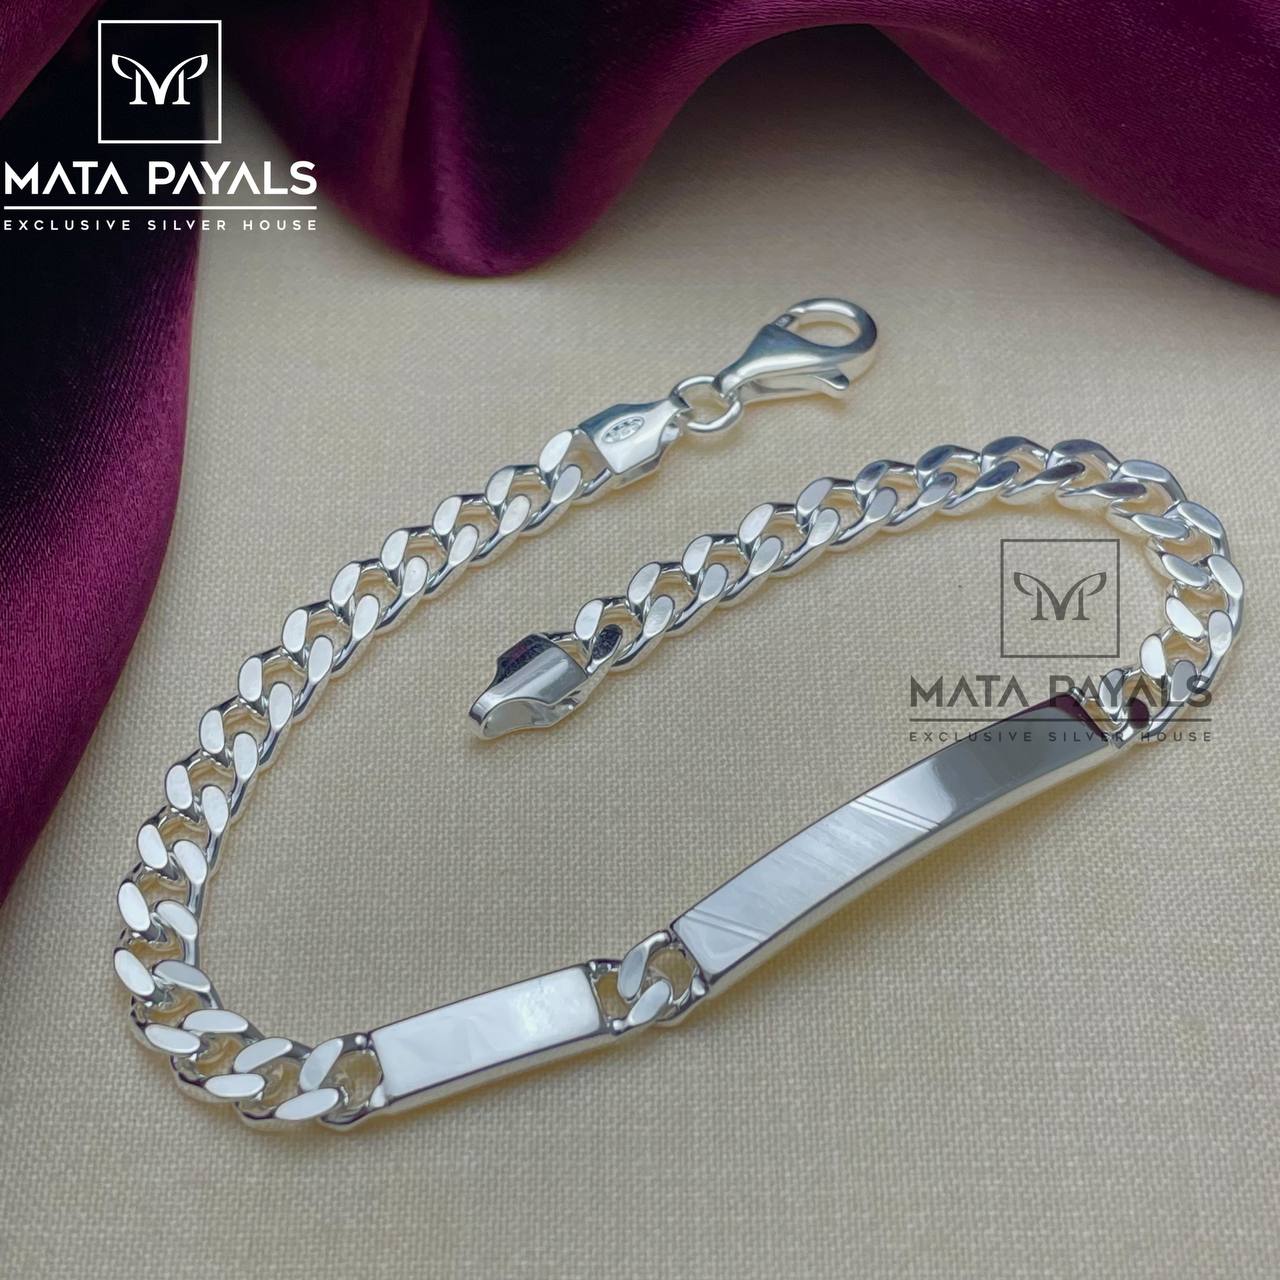 Leather Strap Silver Men's Bracelet with Baklava Pattern Design